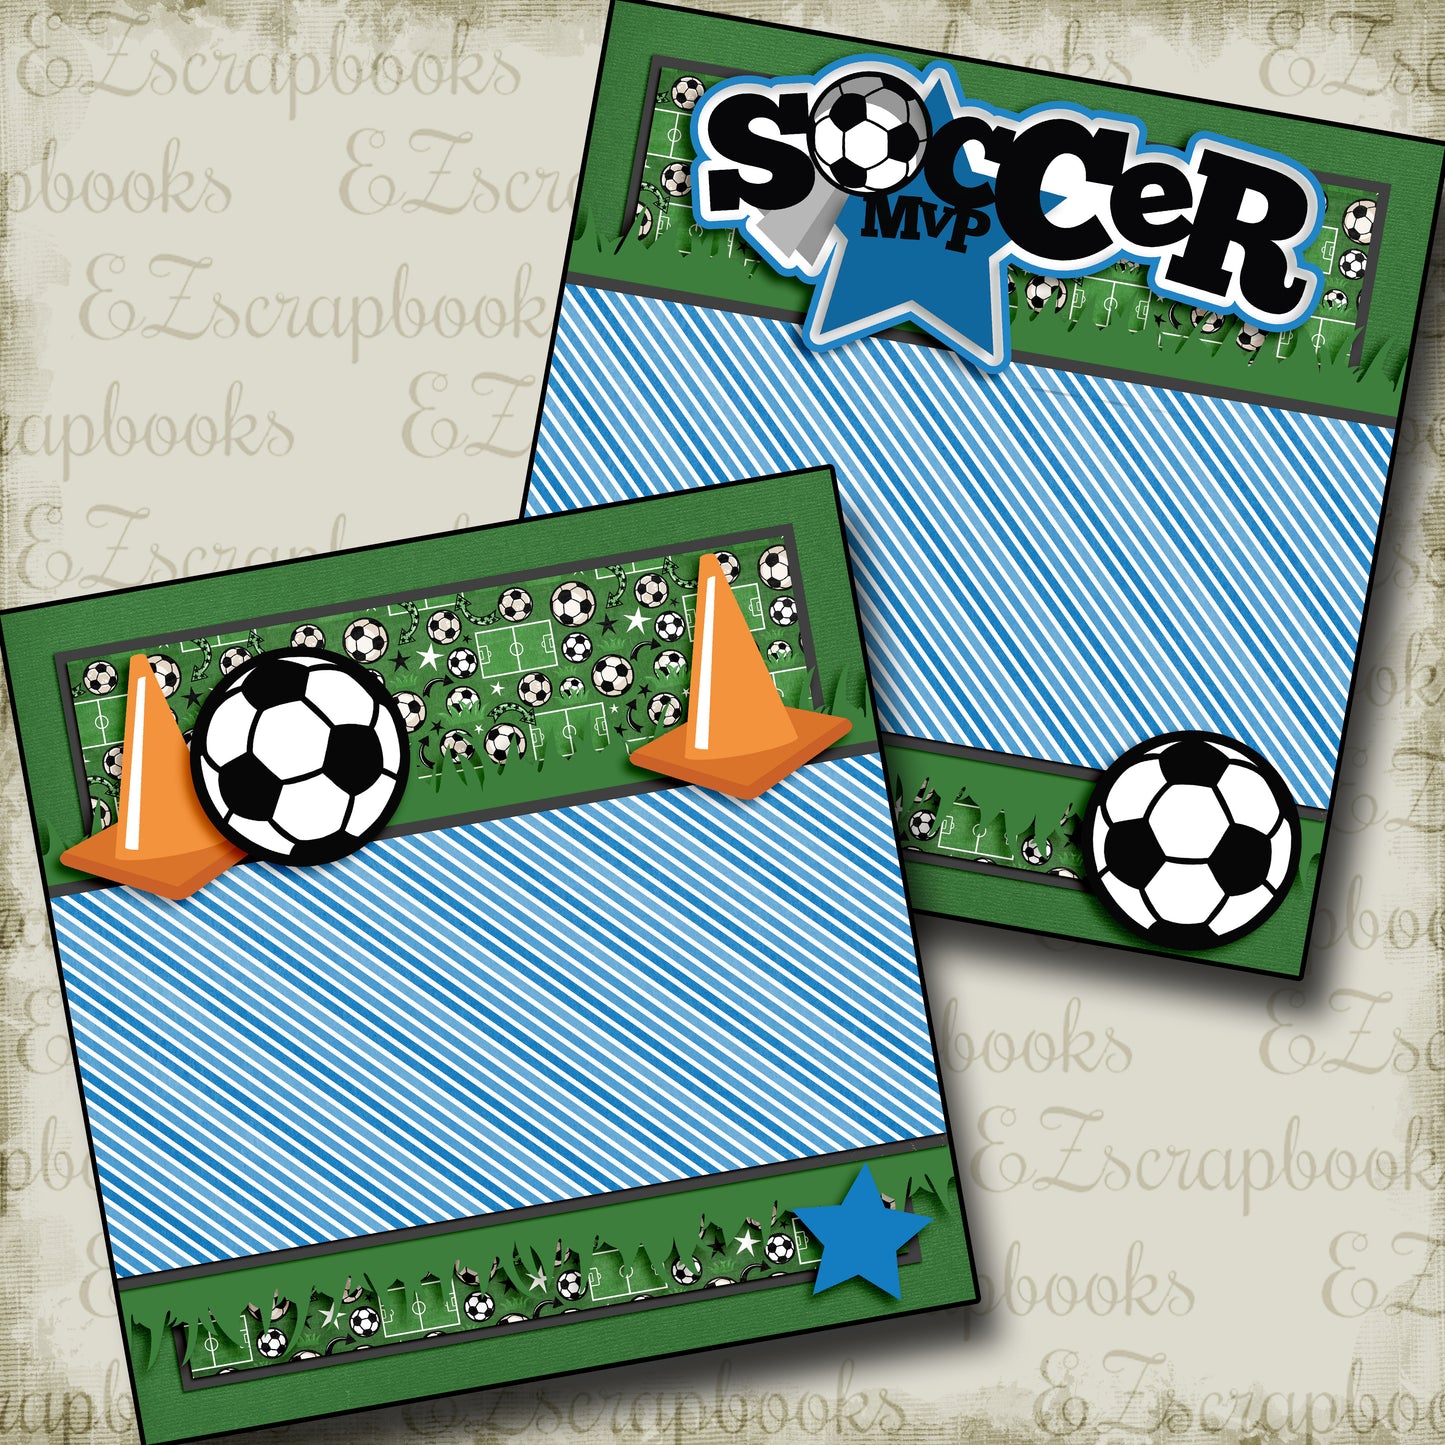 Soccer MVP Blue NPM - 3321 - EZscrapbooks Scrapbook Layouts soccer, Sports